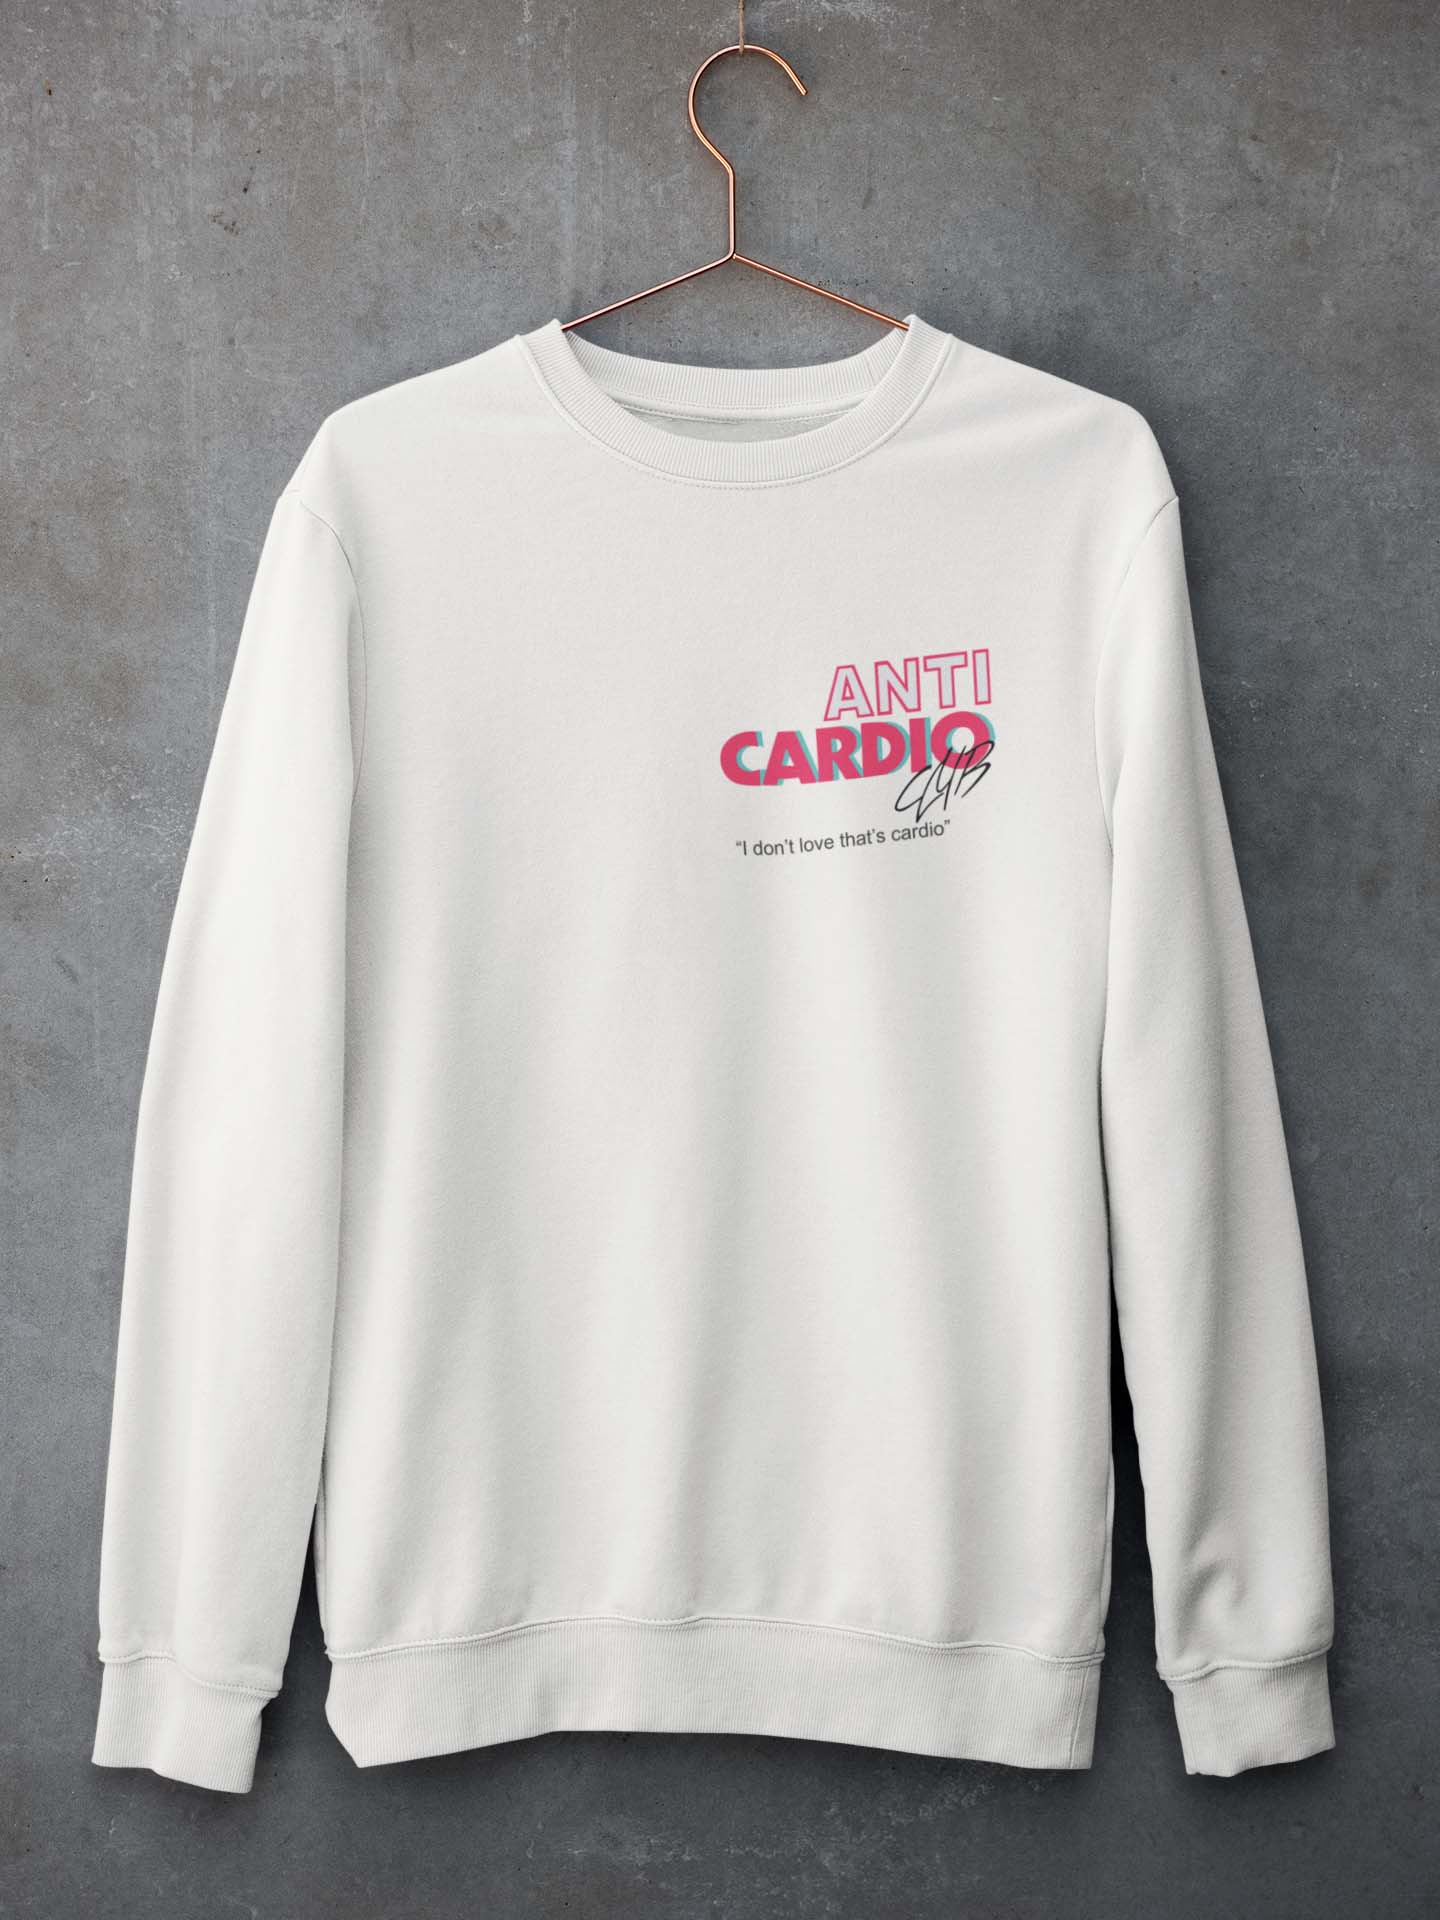 Anti Cardio Club Relaxed Fit Sweatshirt For Women